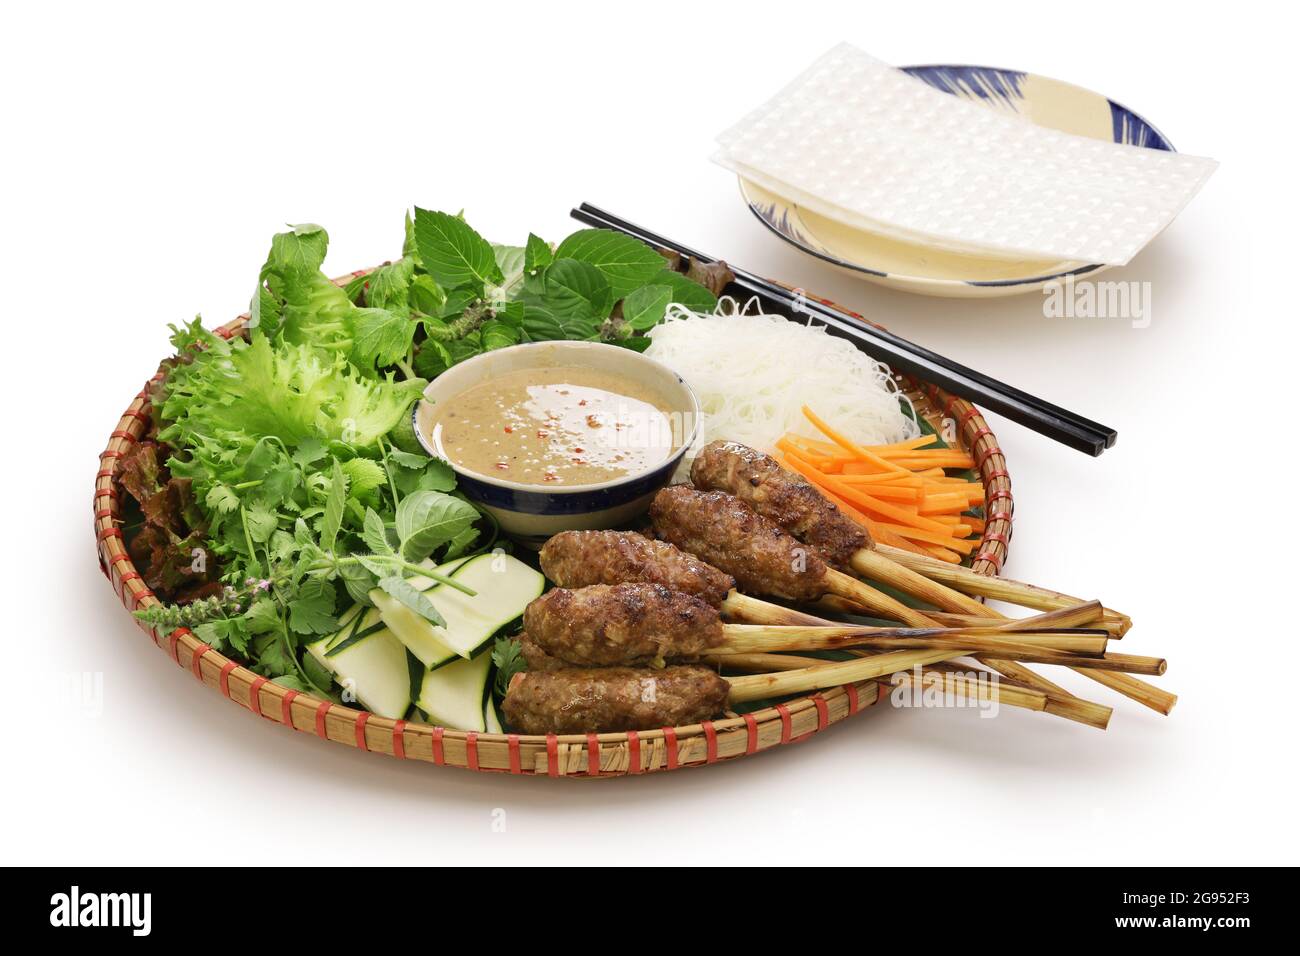 nem lui fue, grilled minced pork sausages on lemongrass skewers, vietnamese cuisine Stock Photo